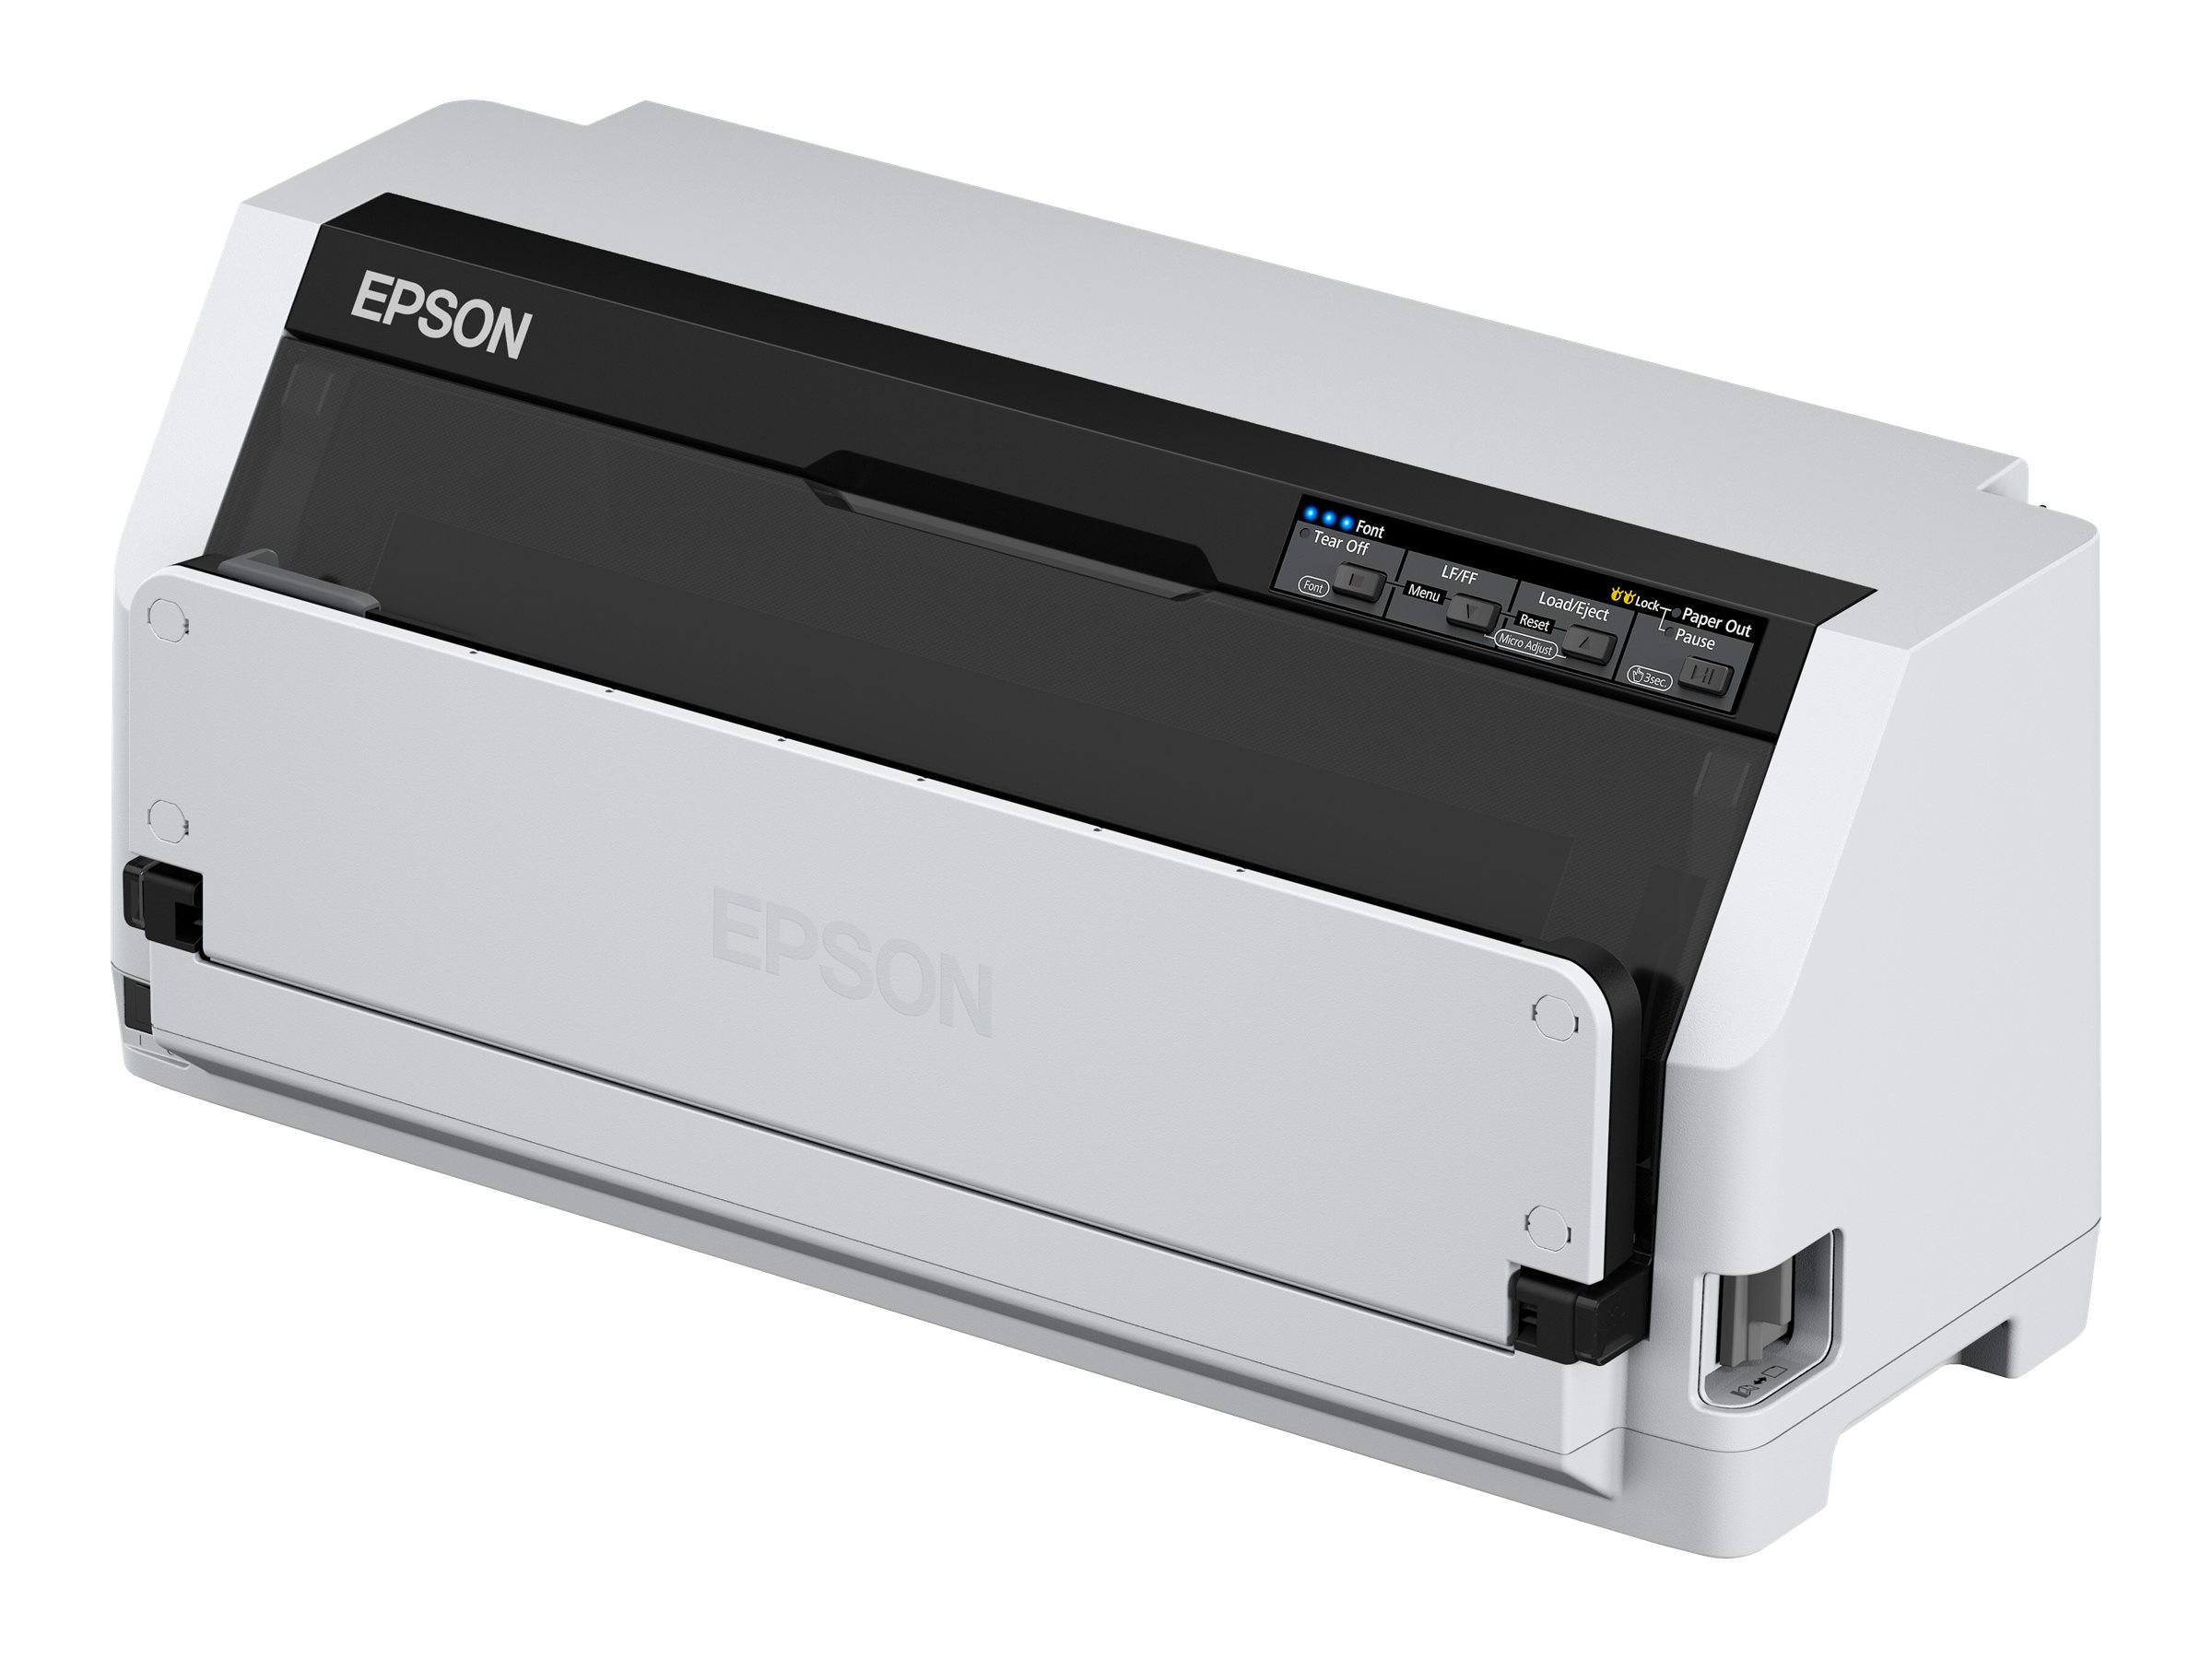 EPSON C11CH96401, Imprimantes bureautique Bureautique